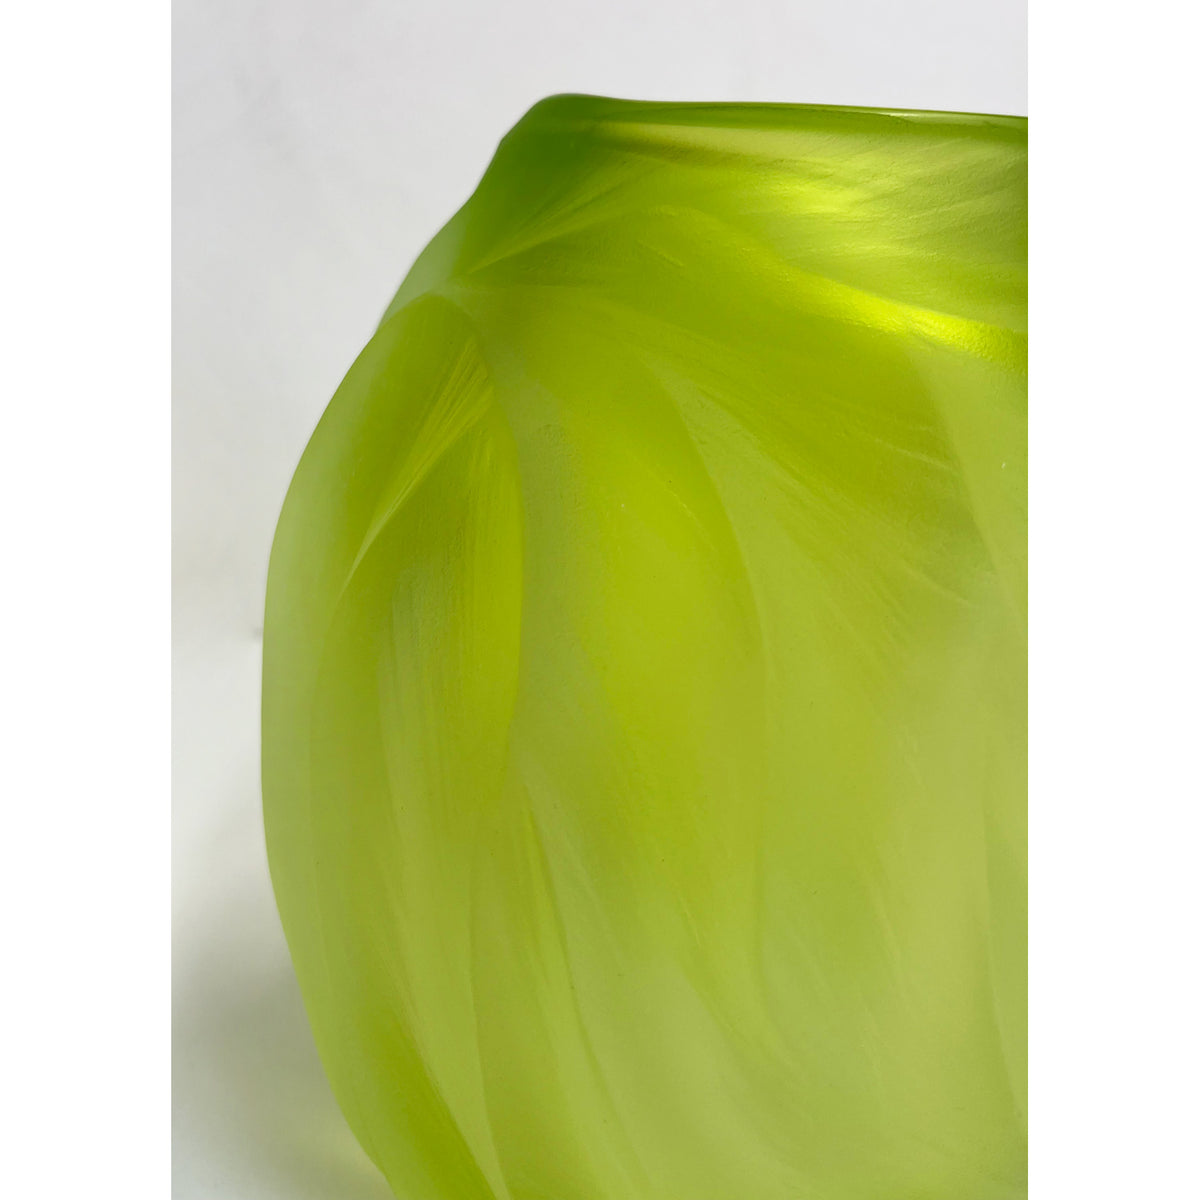 Brad Copping - Chartreuse Undula, 7.5" x 6" x 6.5"